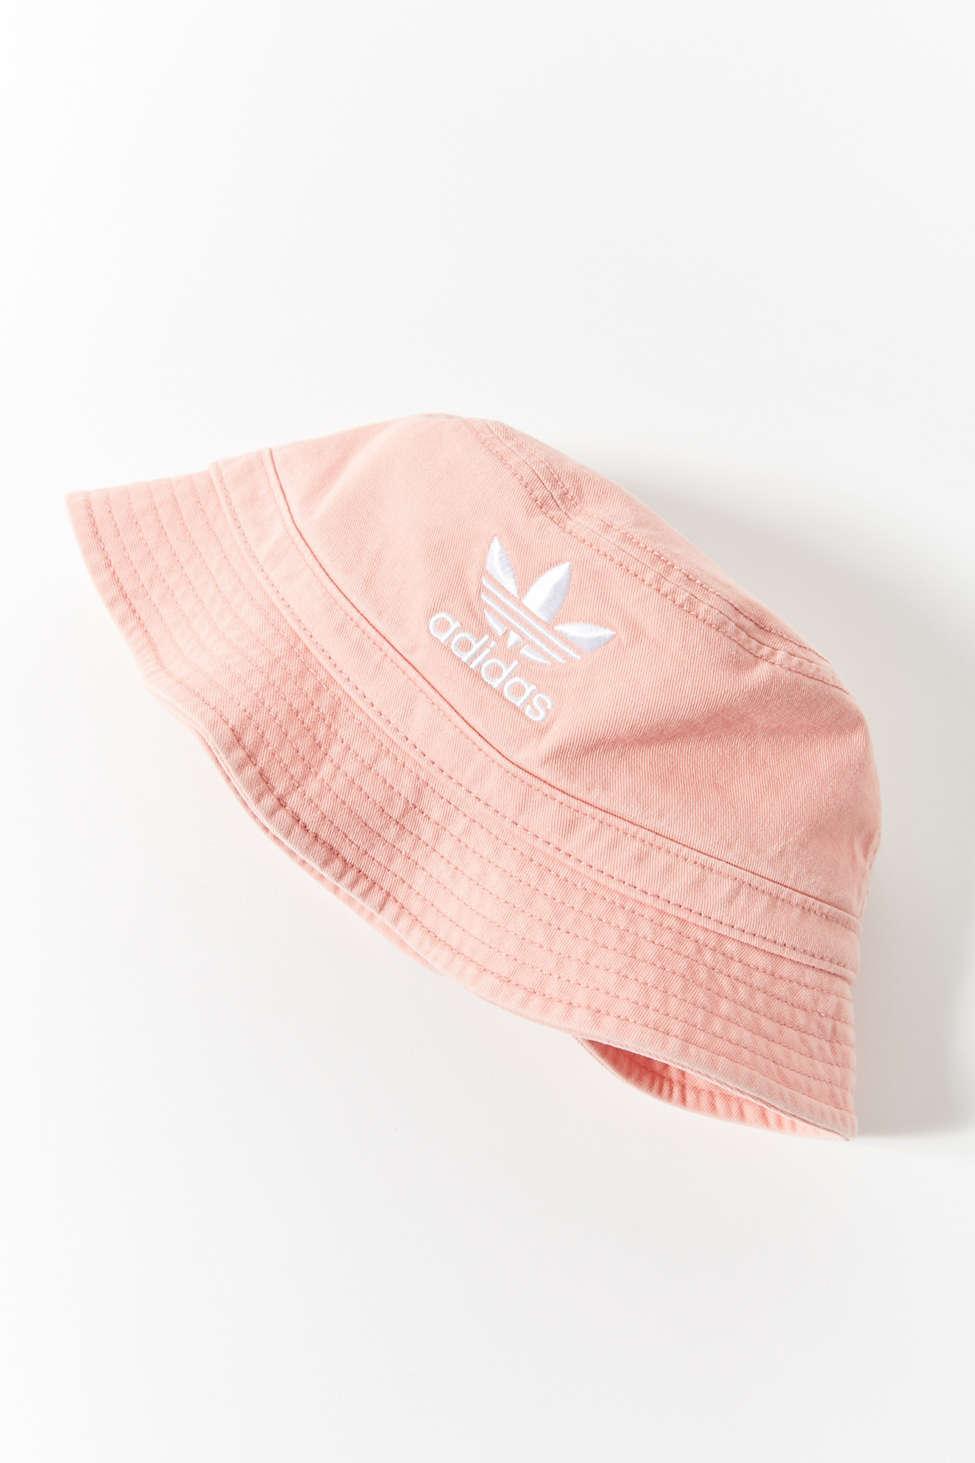 pink adidas bucket hat